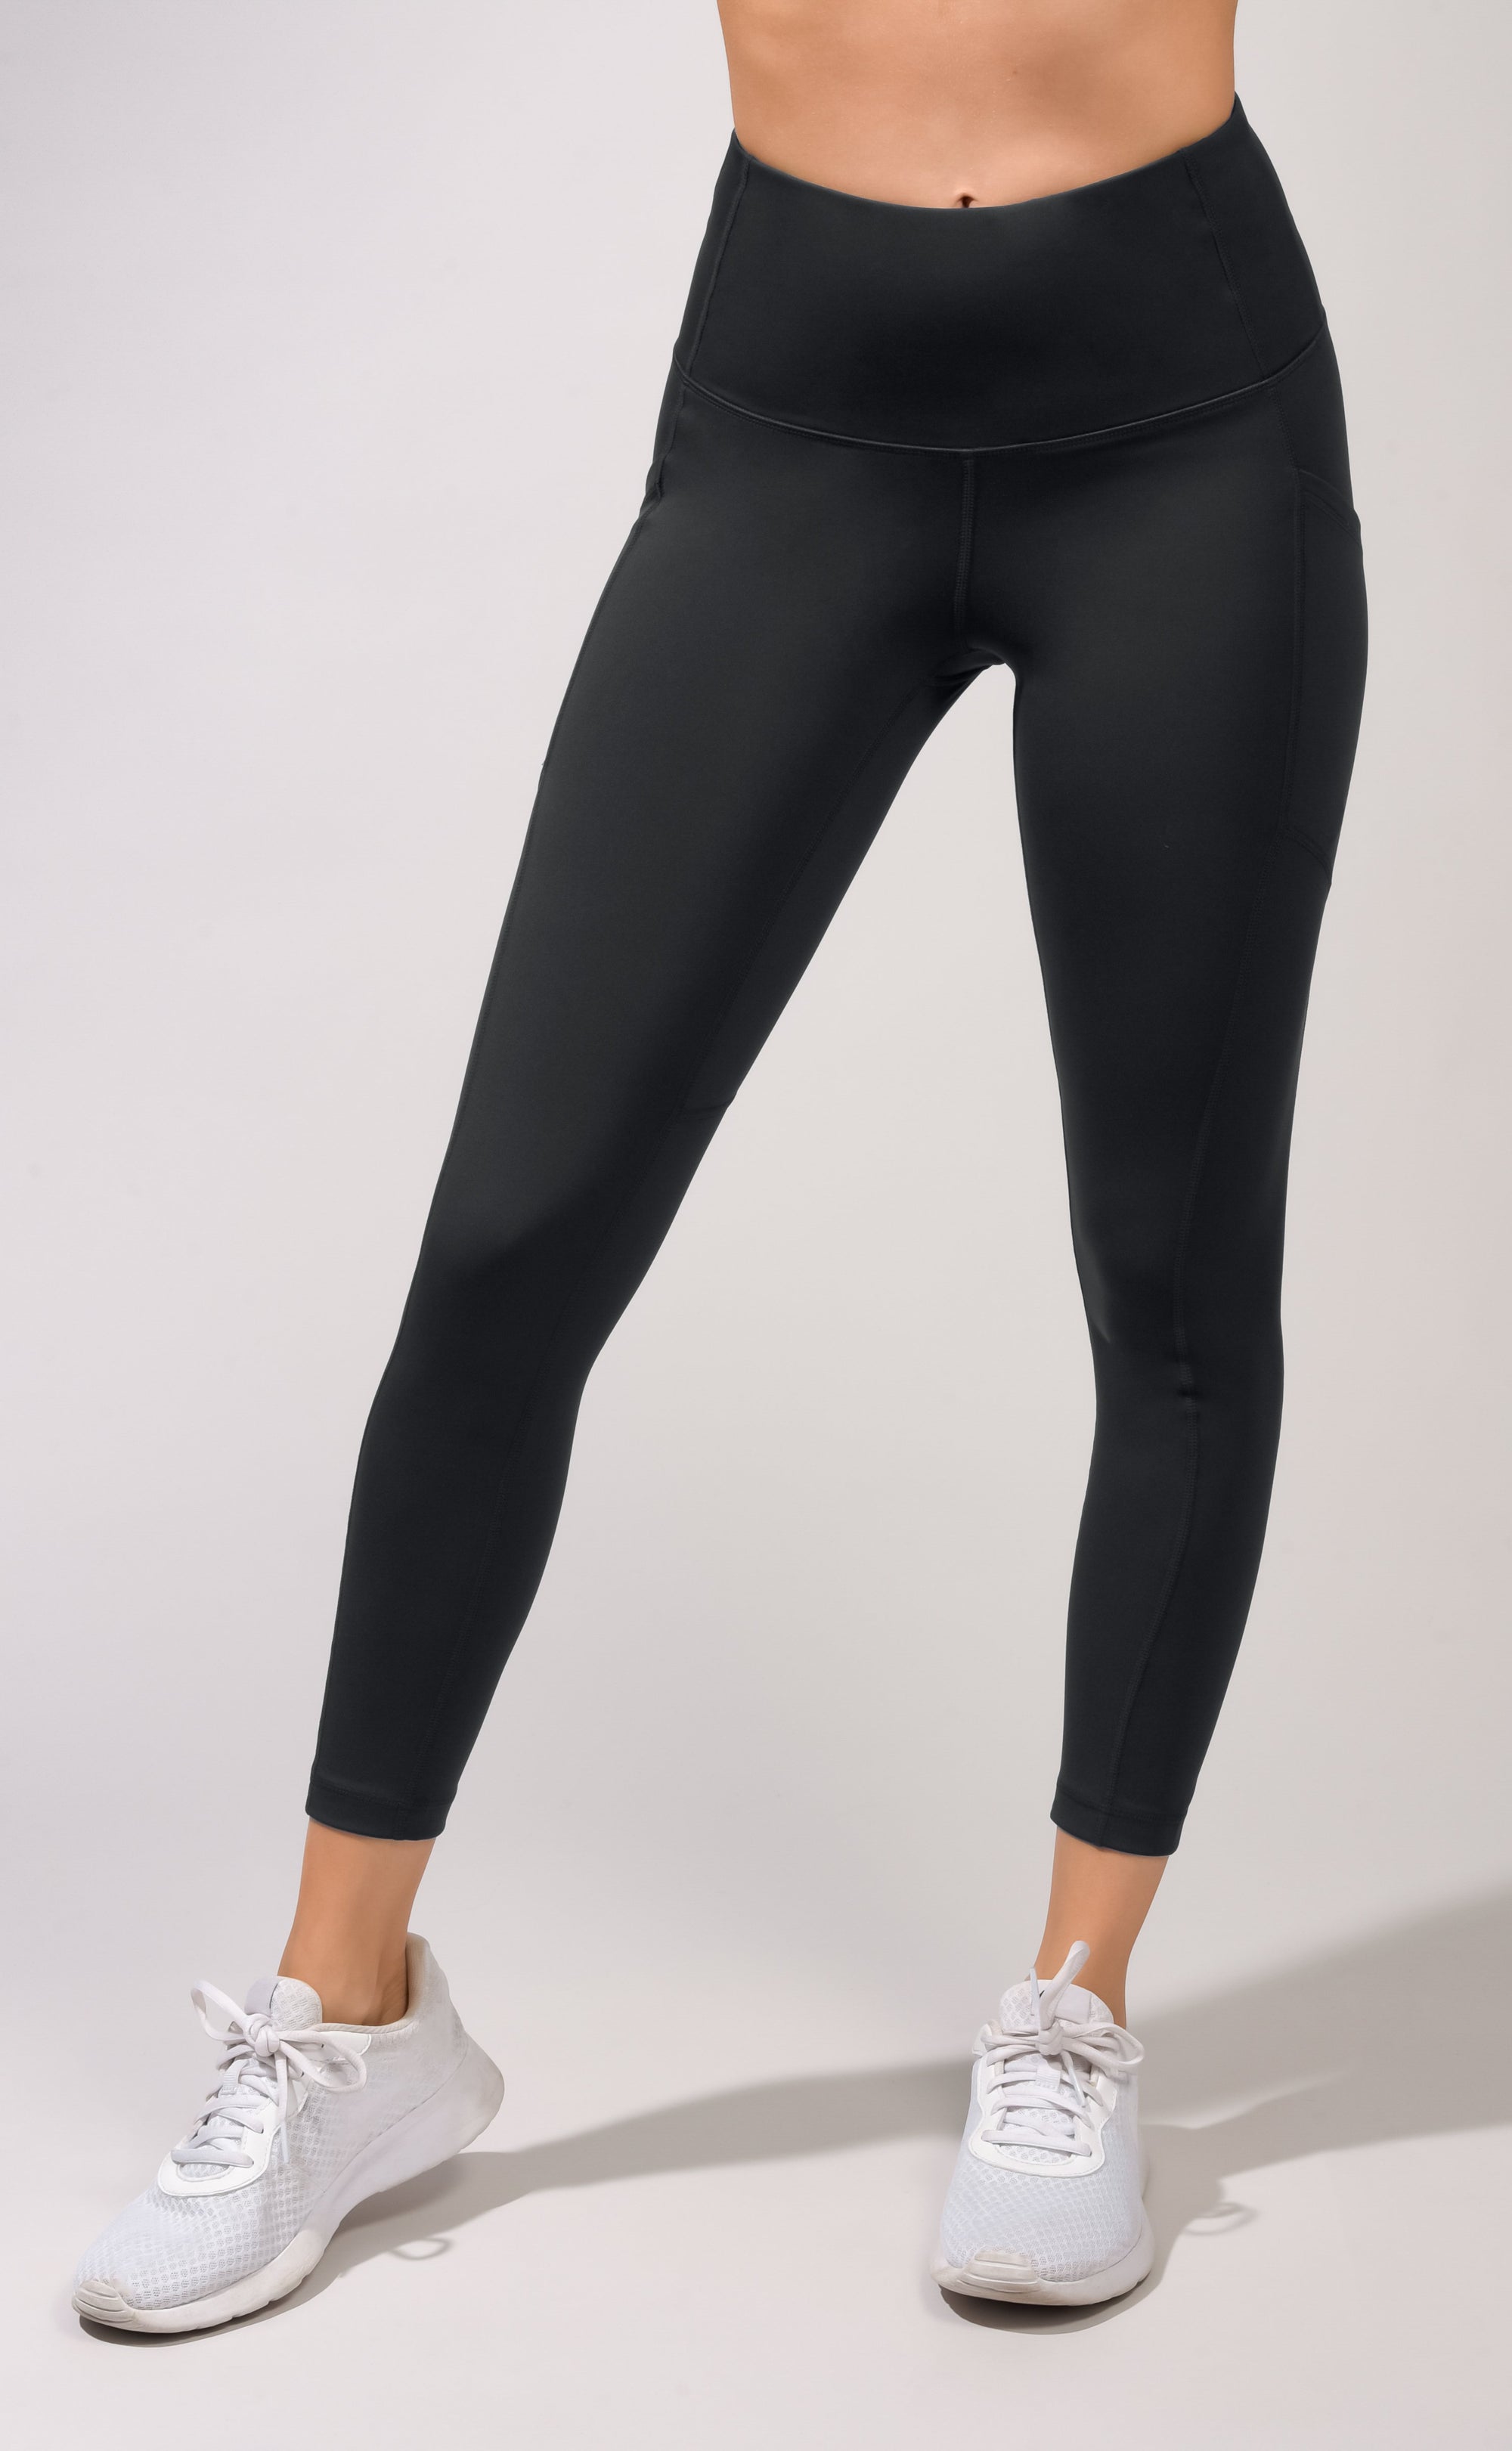 Yogalicious black leggings with reflective stripe